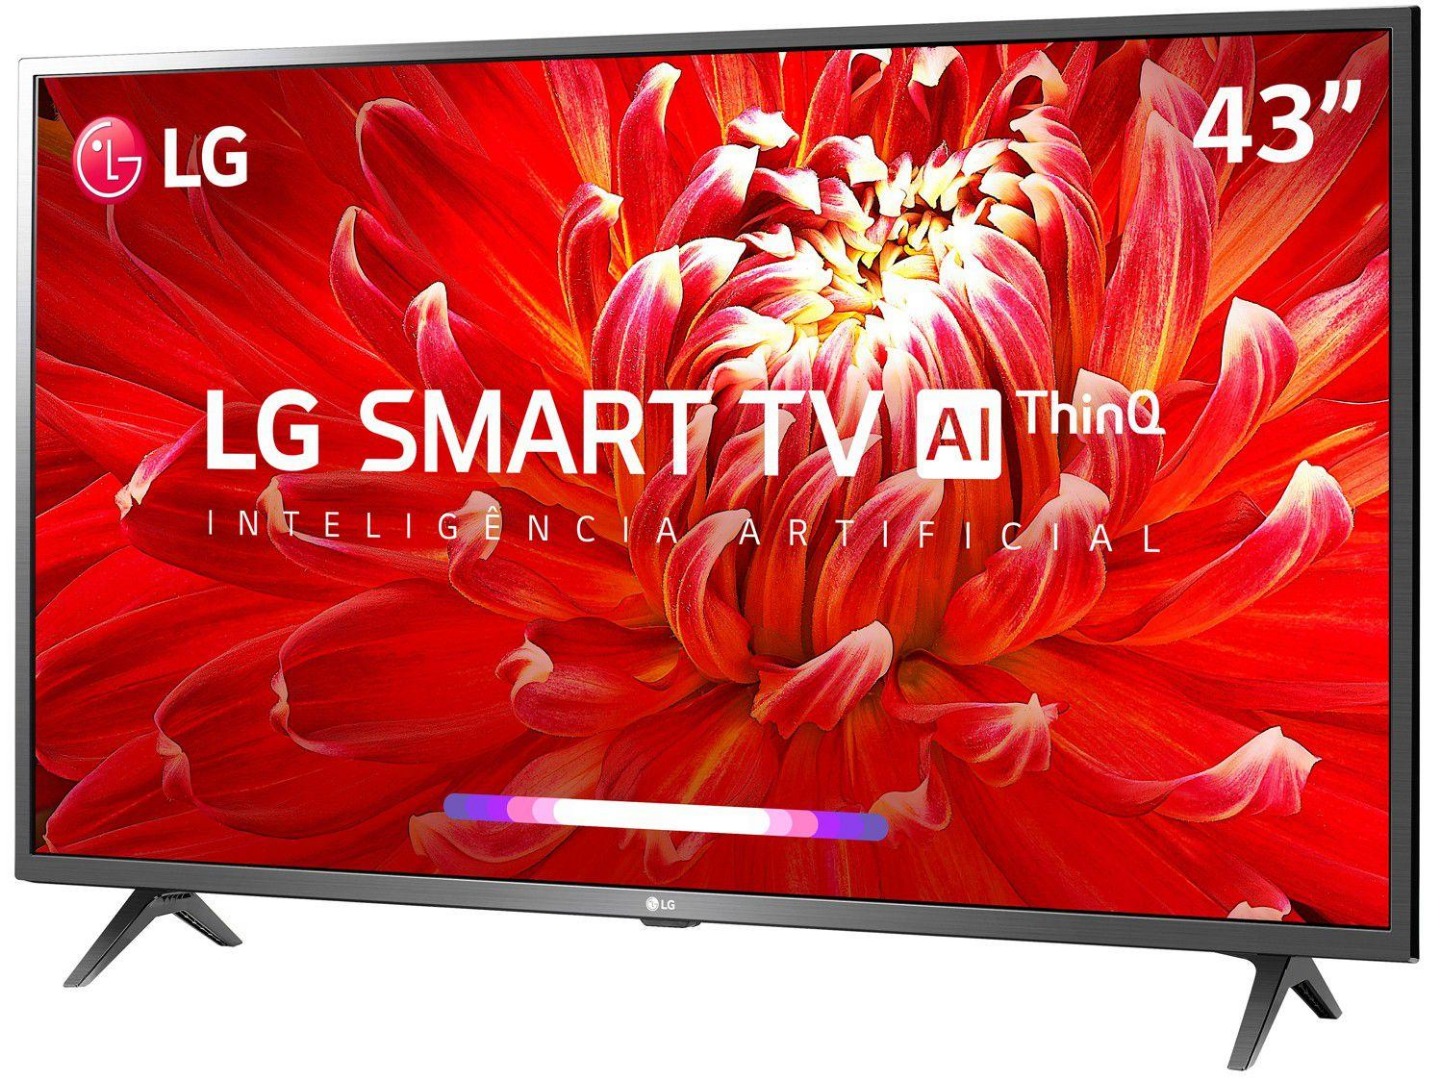 Smart Tv Al Thinq - 43 - LG